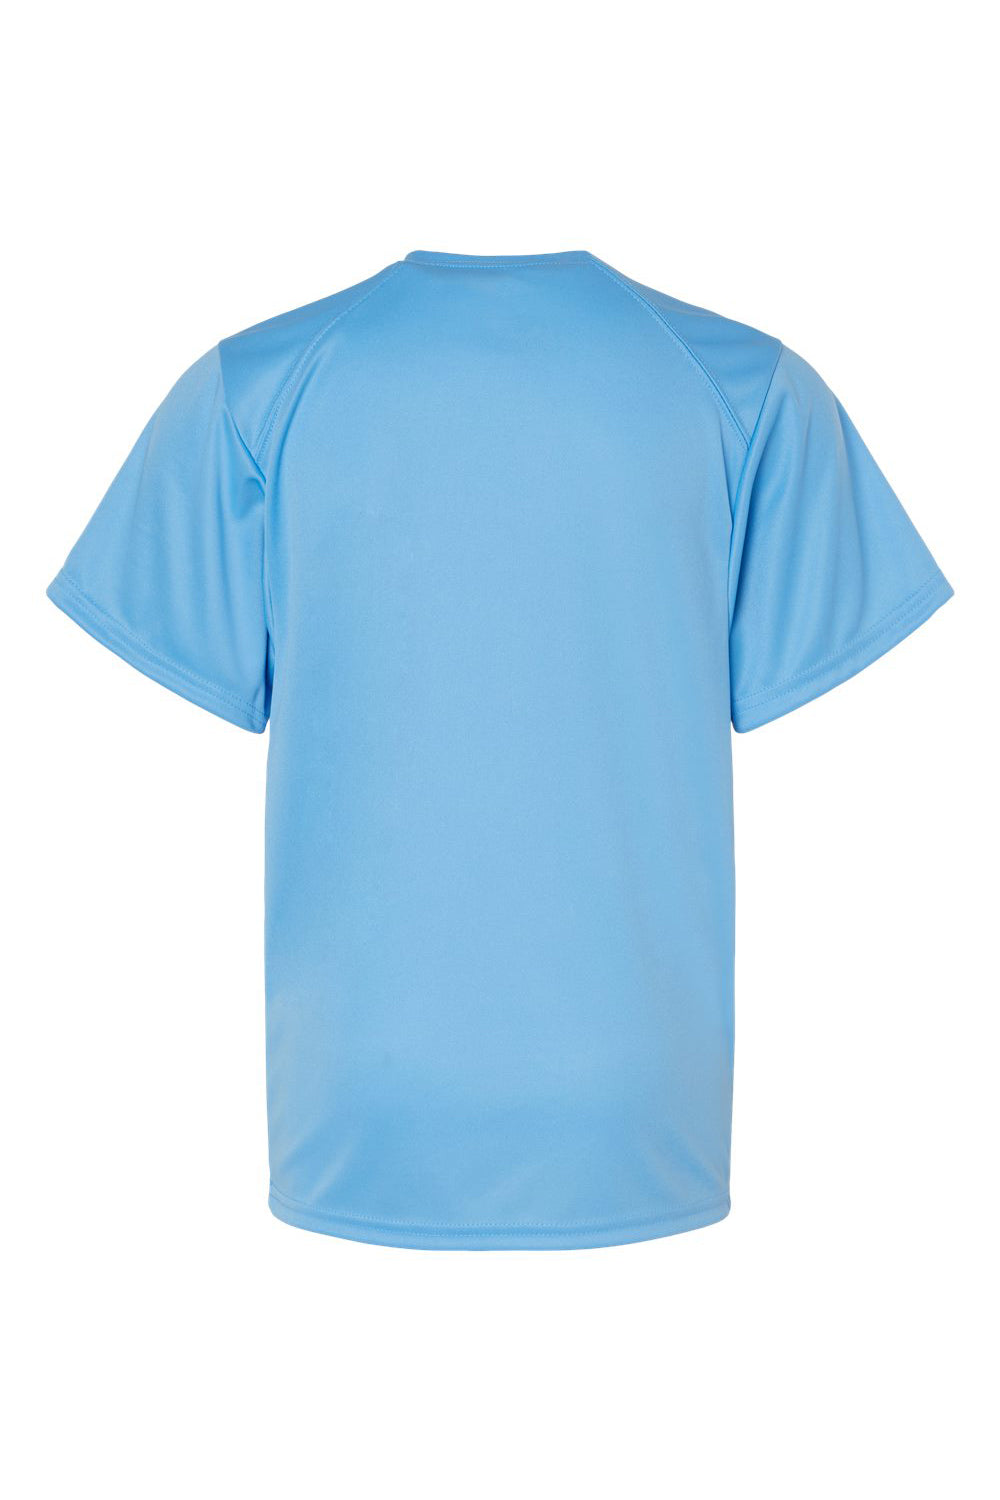 Badger 2120 Youth B-Core Moisture Wicking Short Sleeve Crewneck T-Shirt Columbia Blue Flat Back